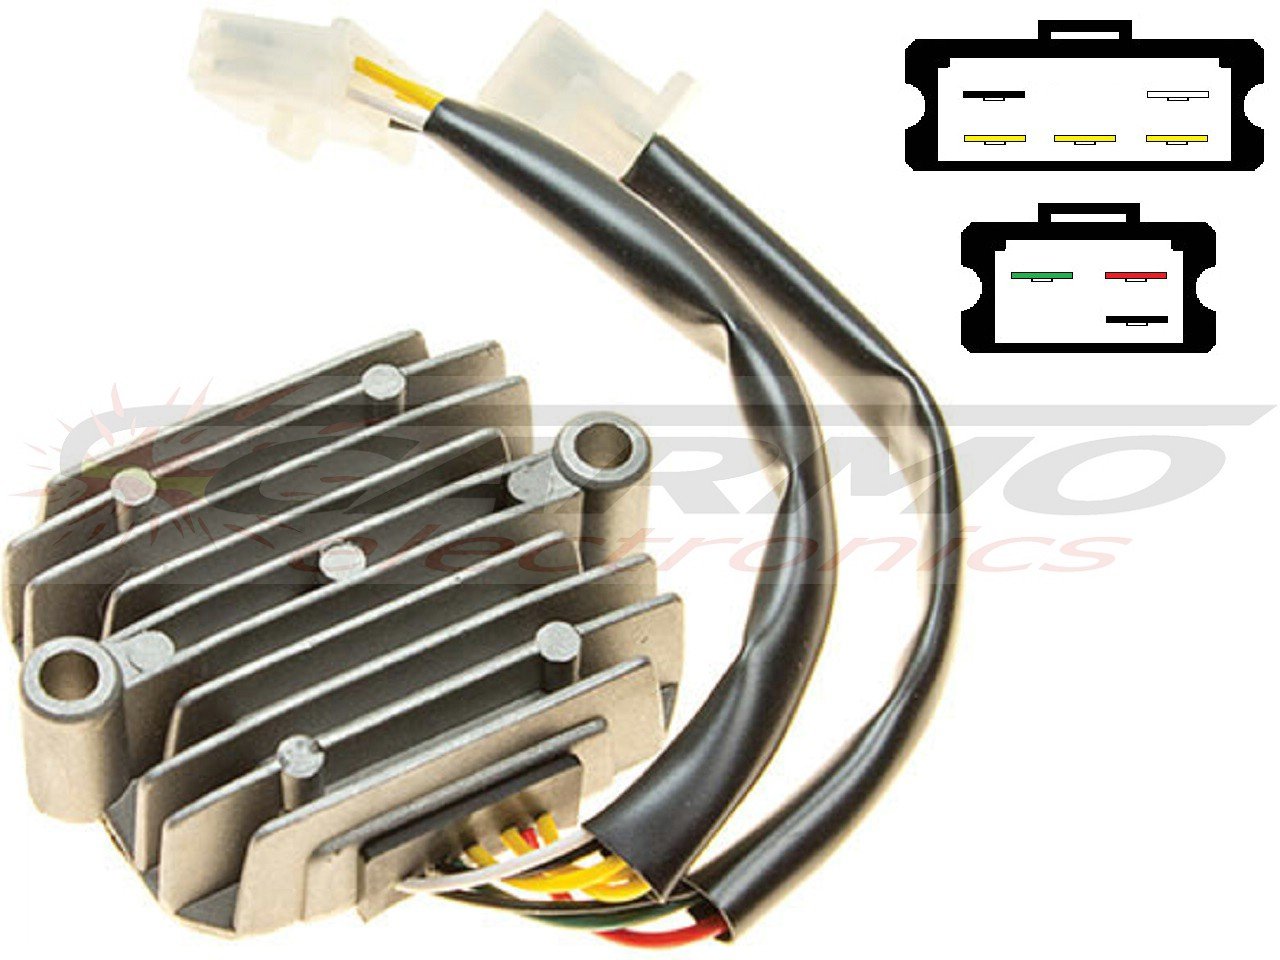 CARR191 - Honda CB CBX MOSFET 電圧レギュレータ/整流器 (SH236-12, SH236A-12, SH255A-12) - 画像をクリックして閉じる